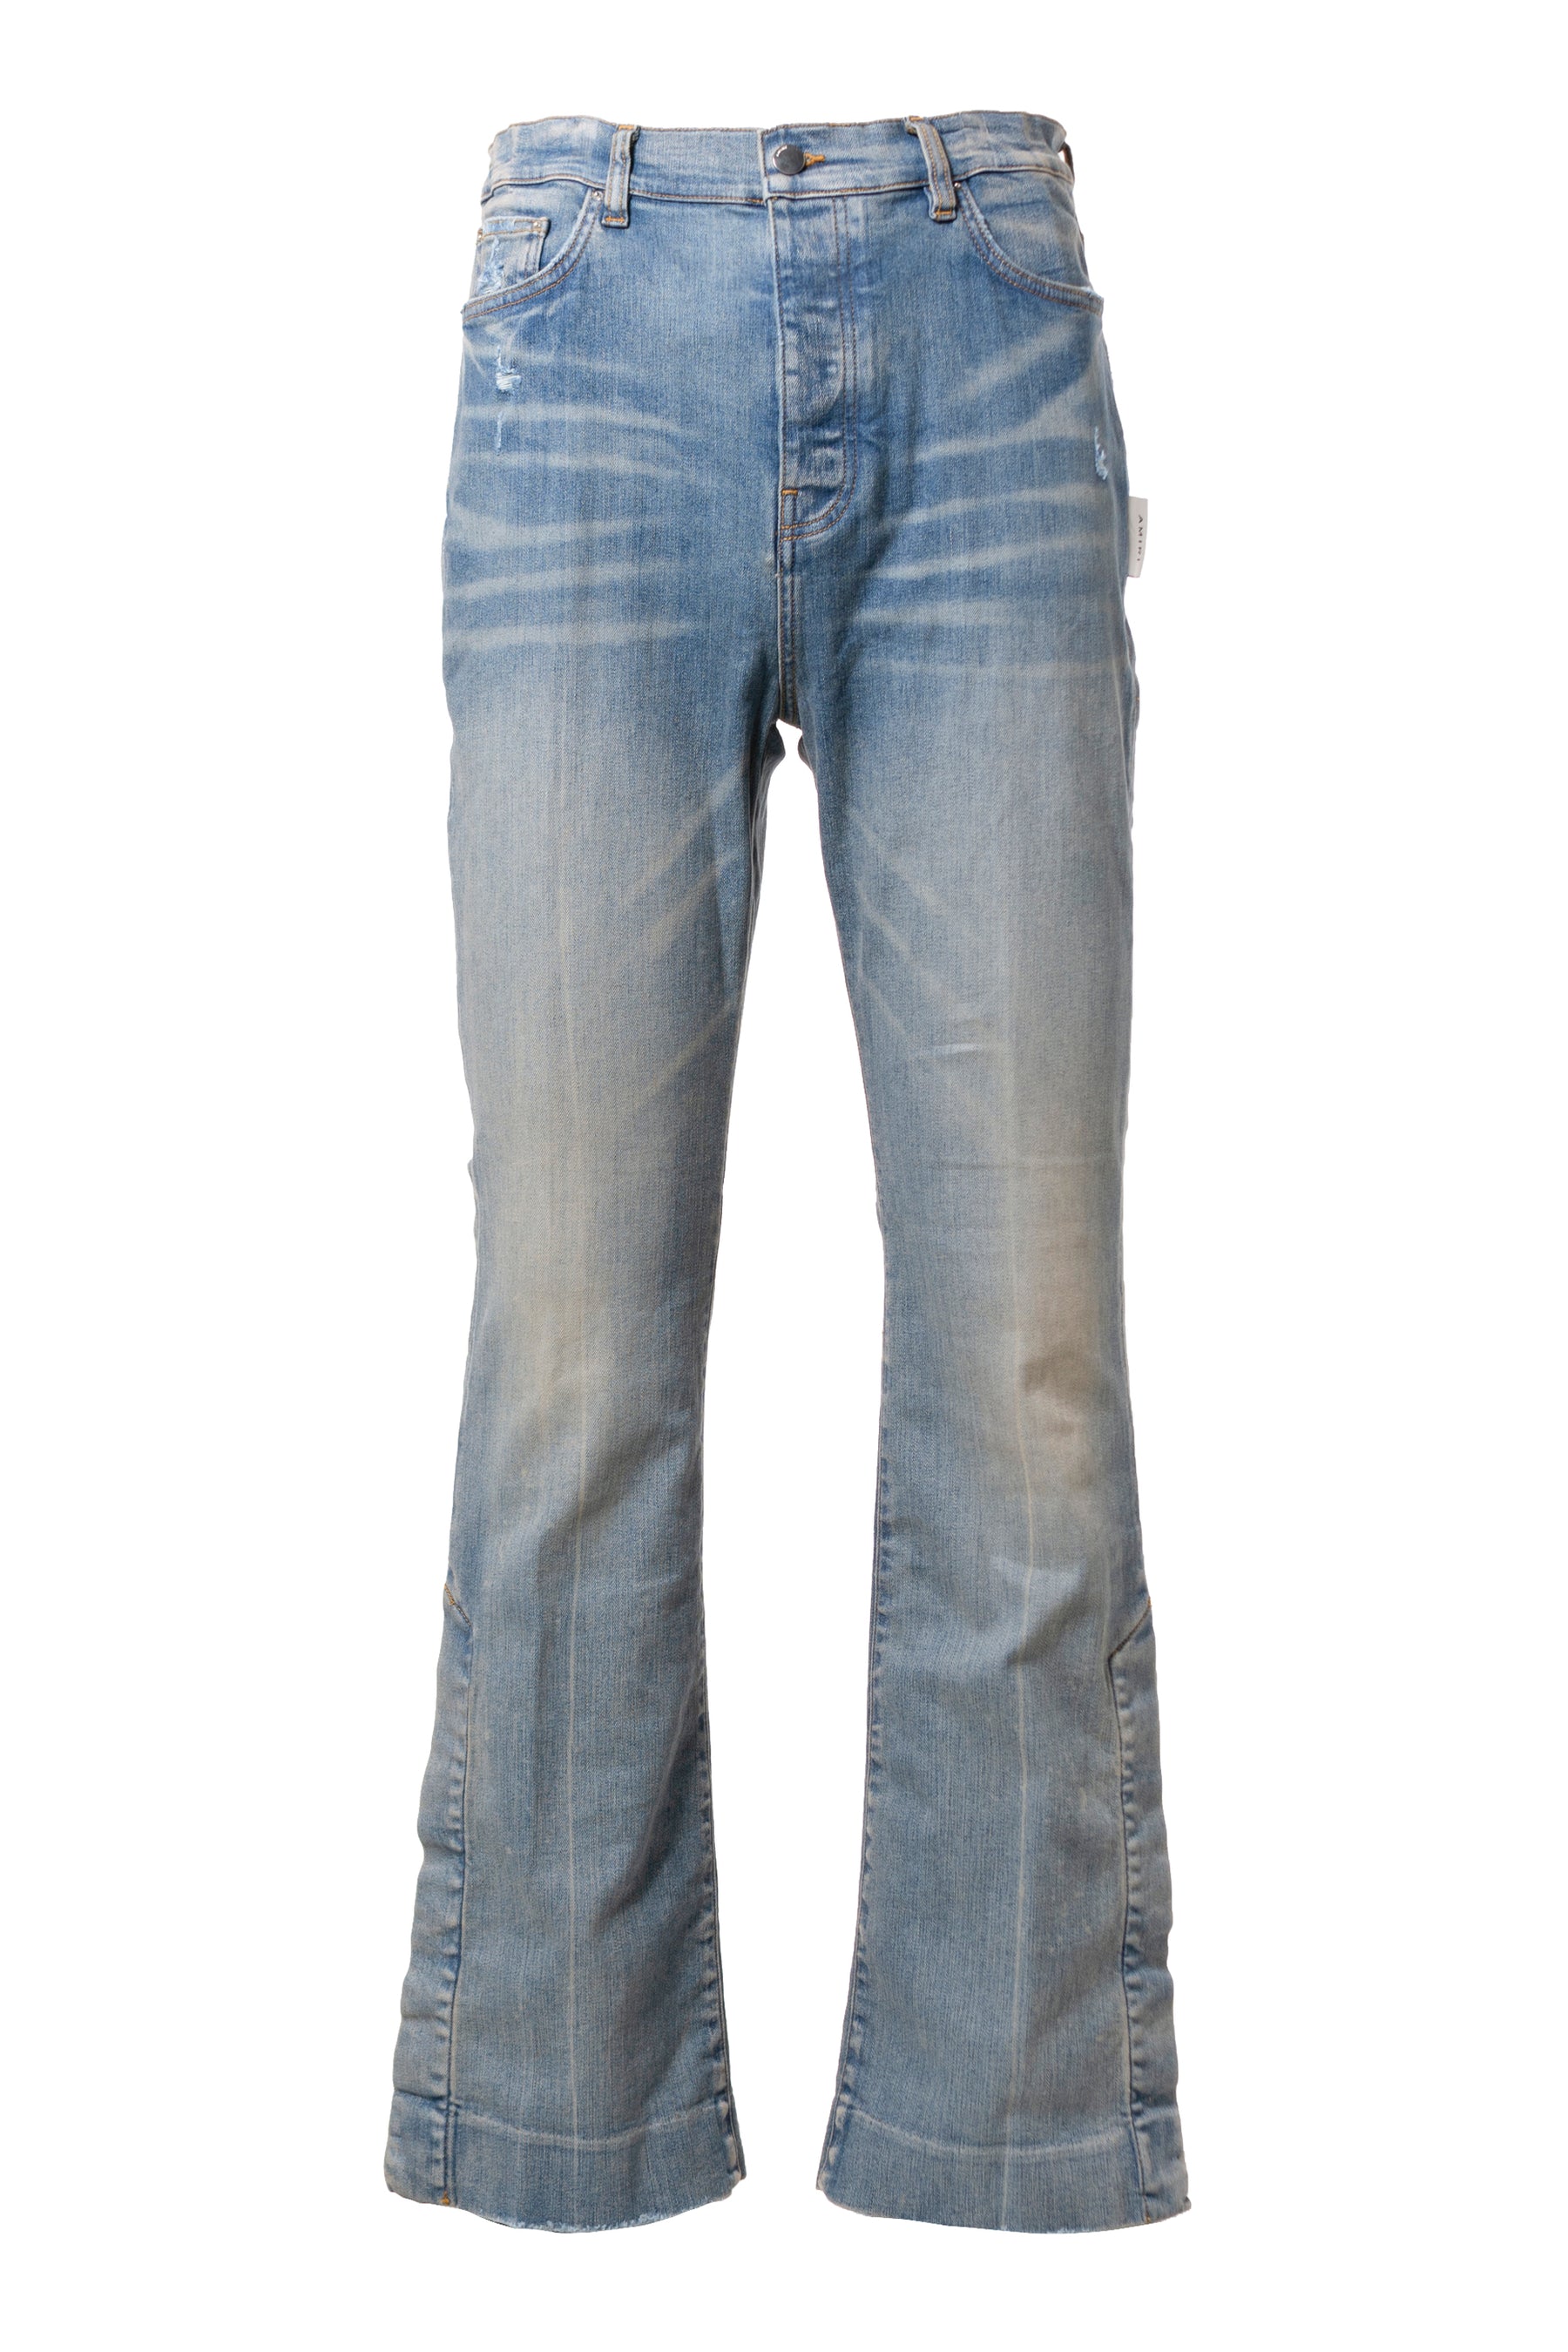 AMIRI アミリ stack jeans